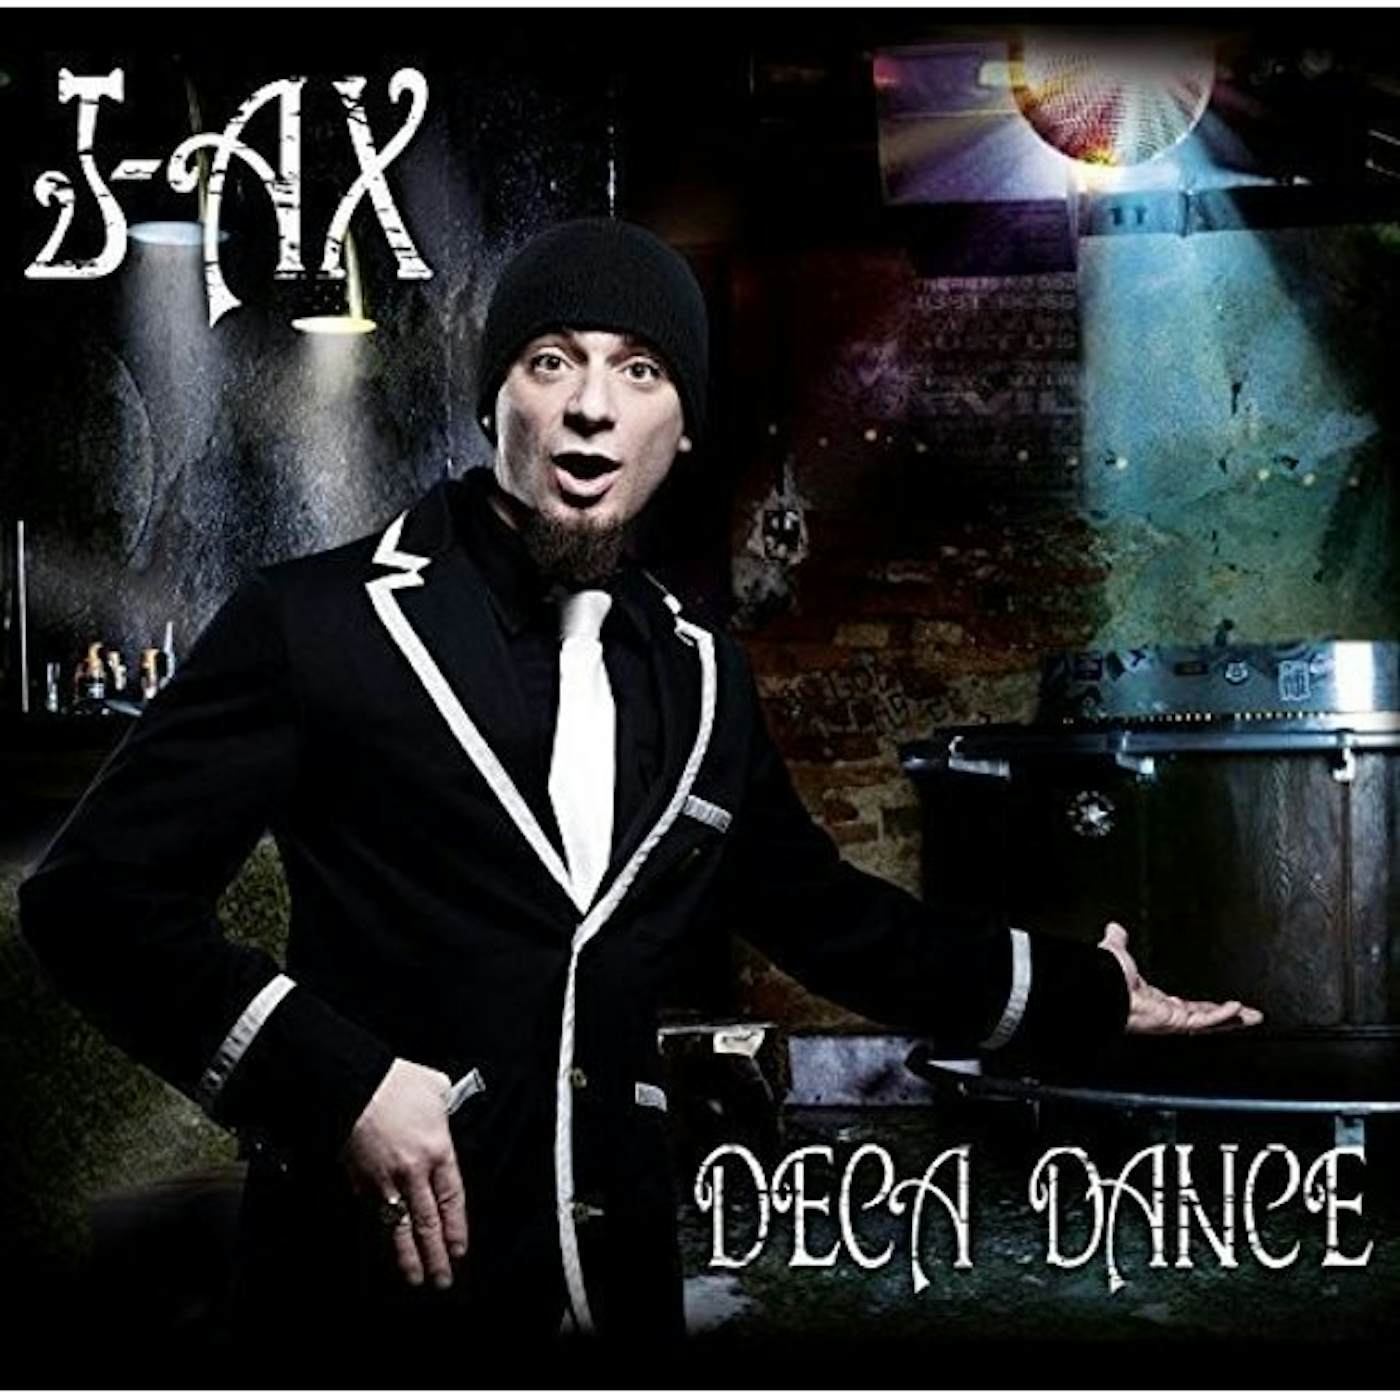 J-AX Deca Dance Vinyl Record